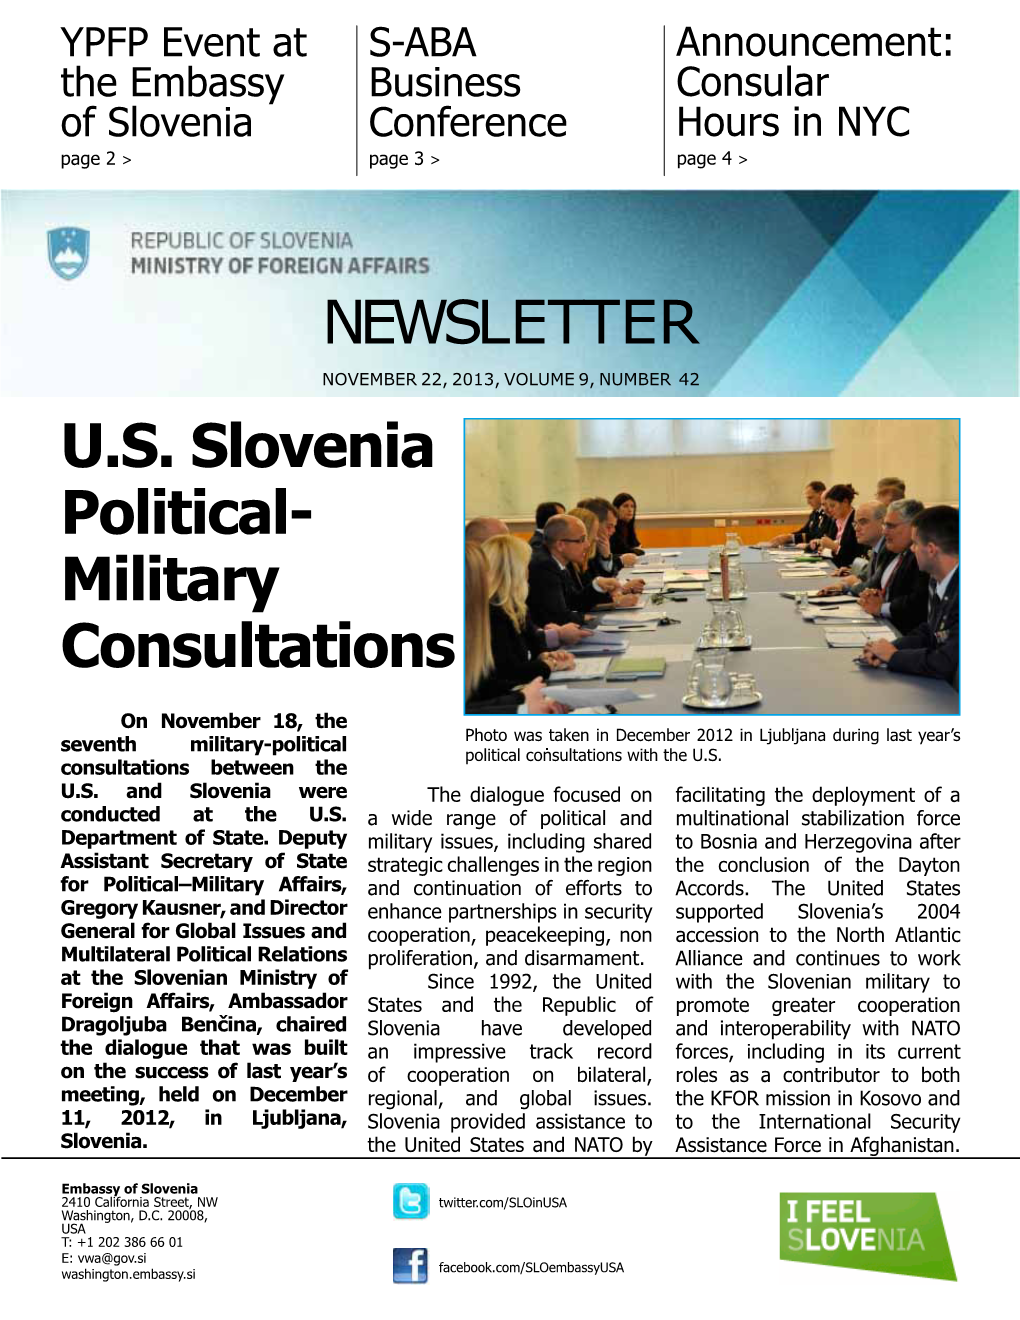 NEWSLETTER U.S. Slovenia Political- Military Consultations